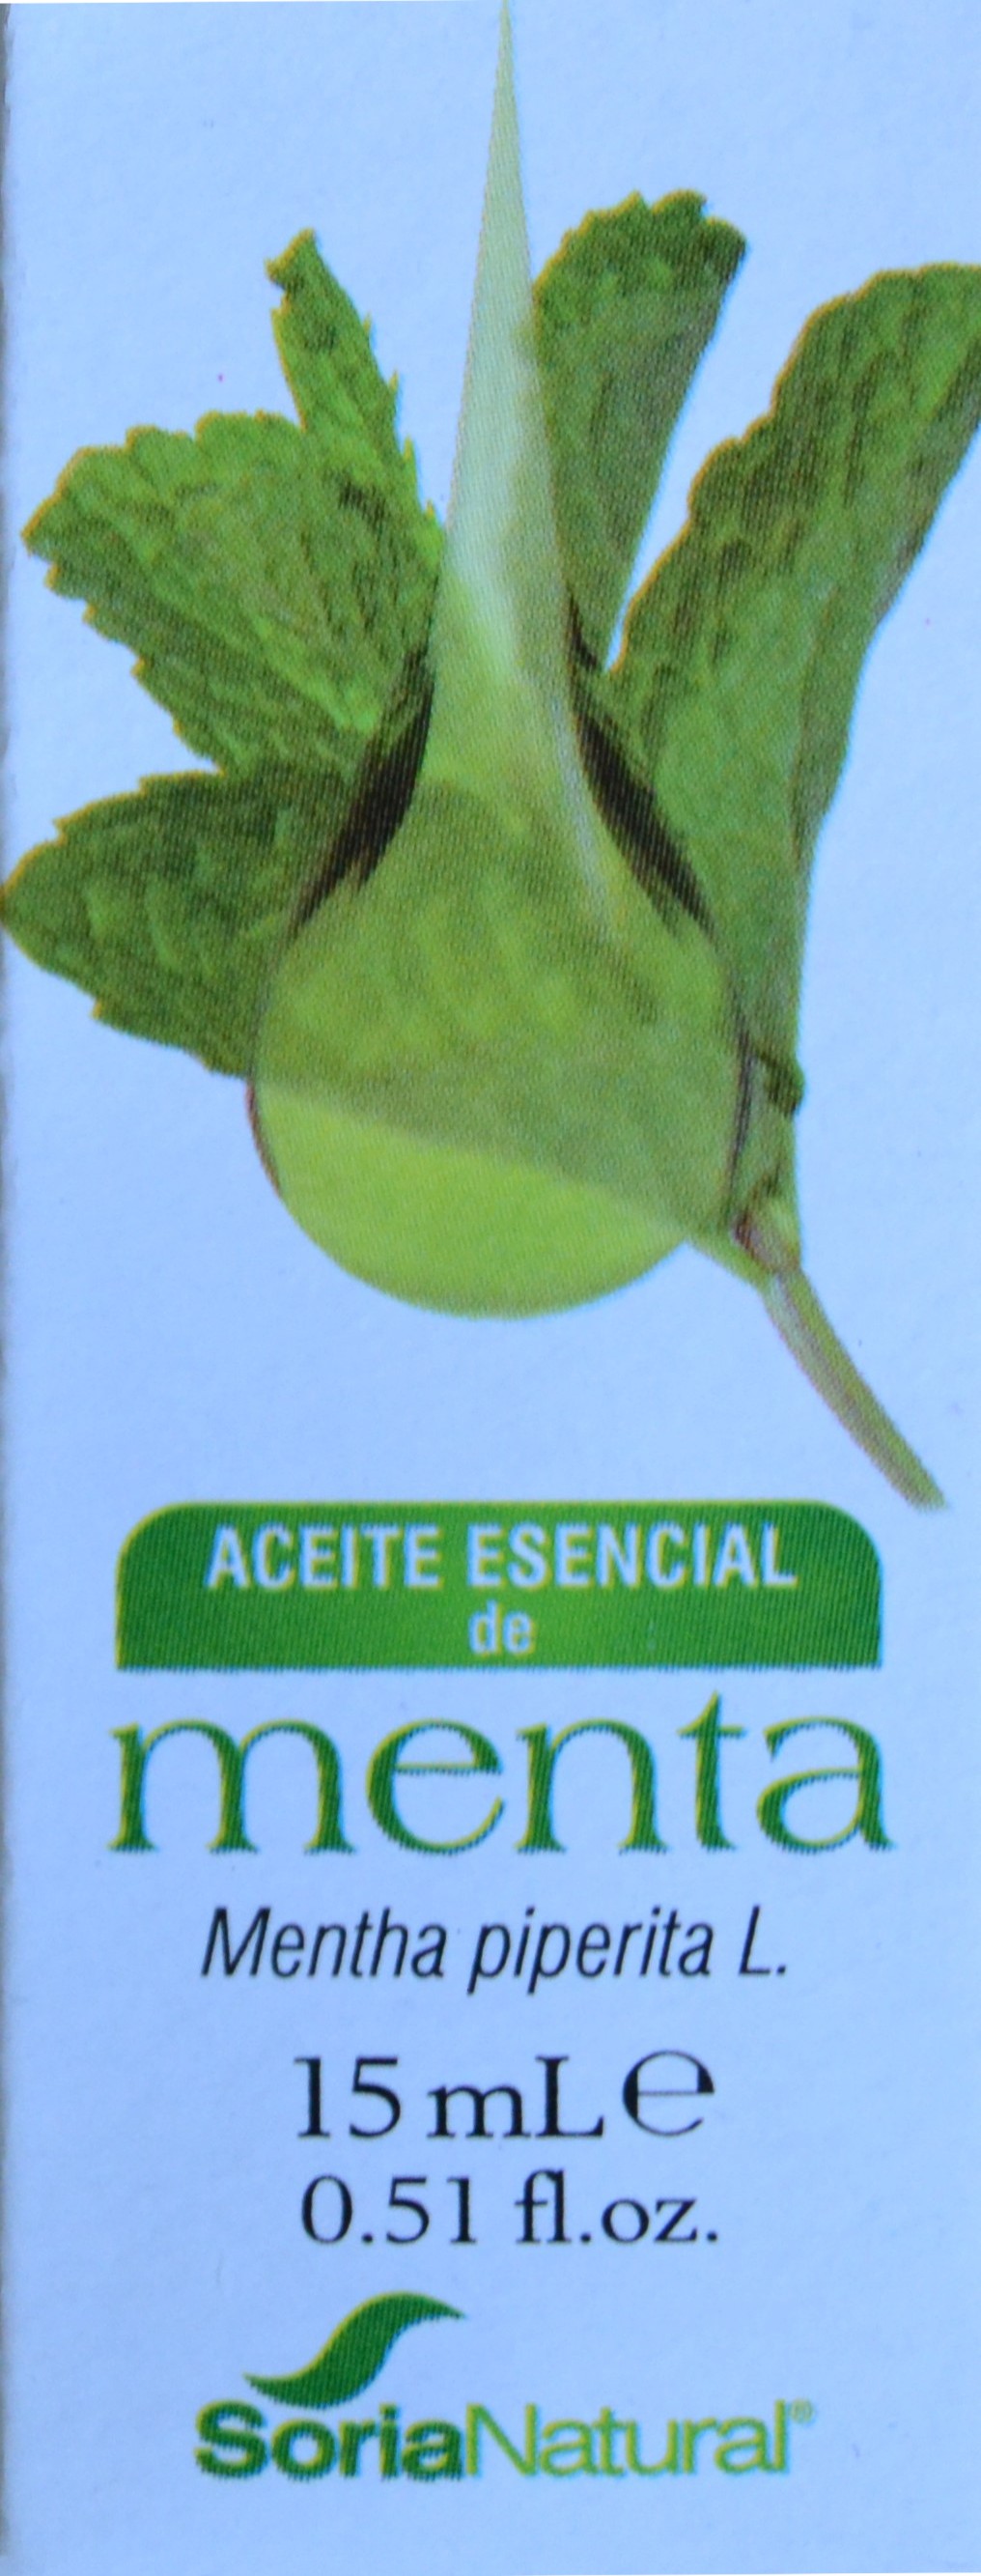 Aceite esencial Menta 15ml - Producto Soria Natural